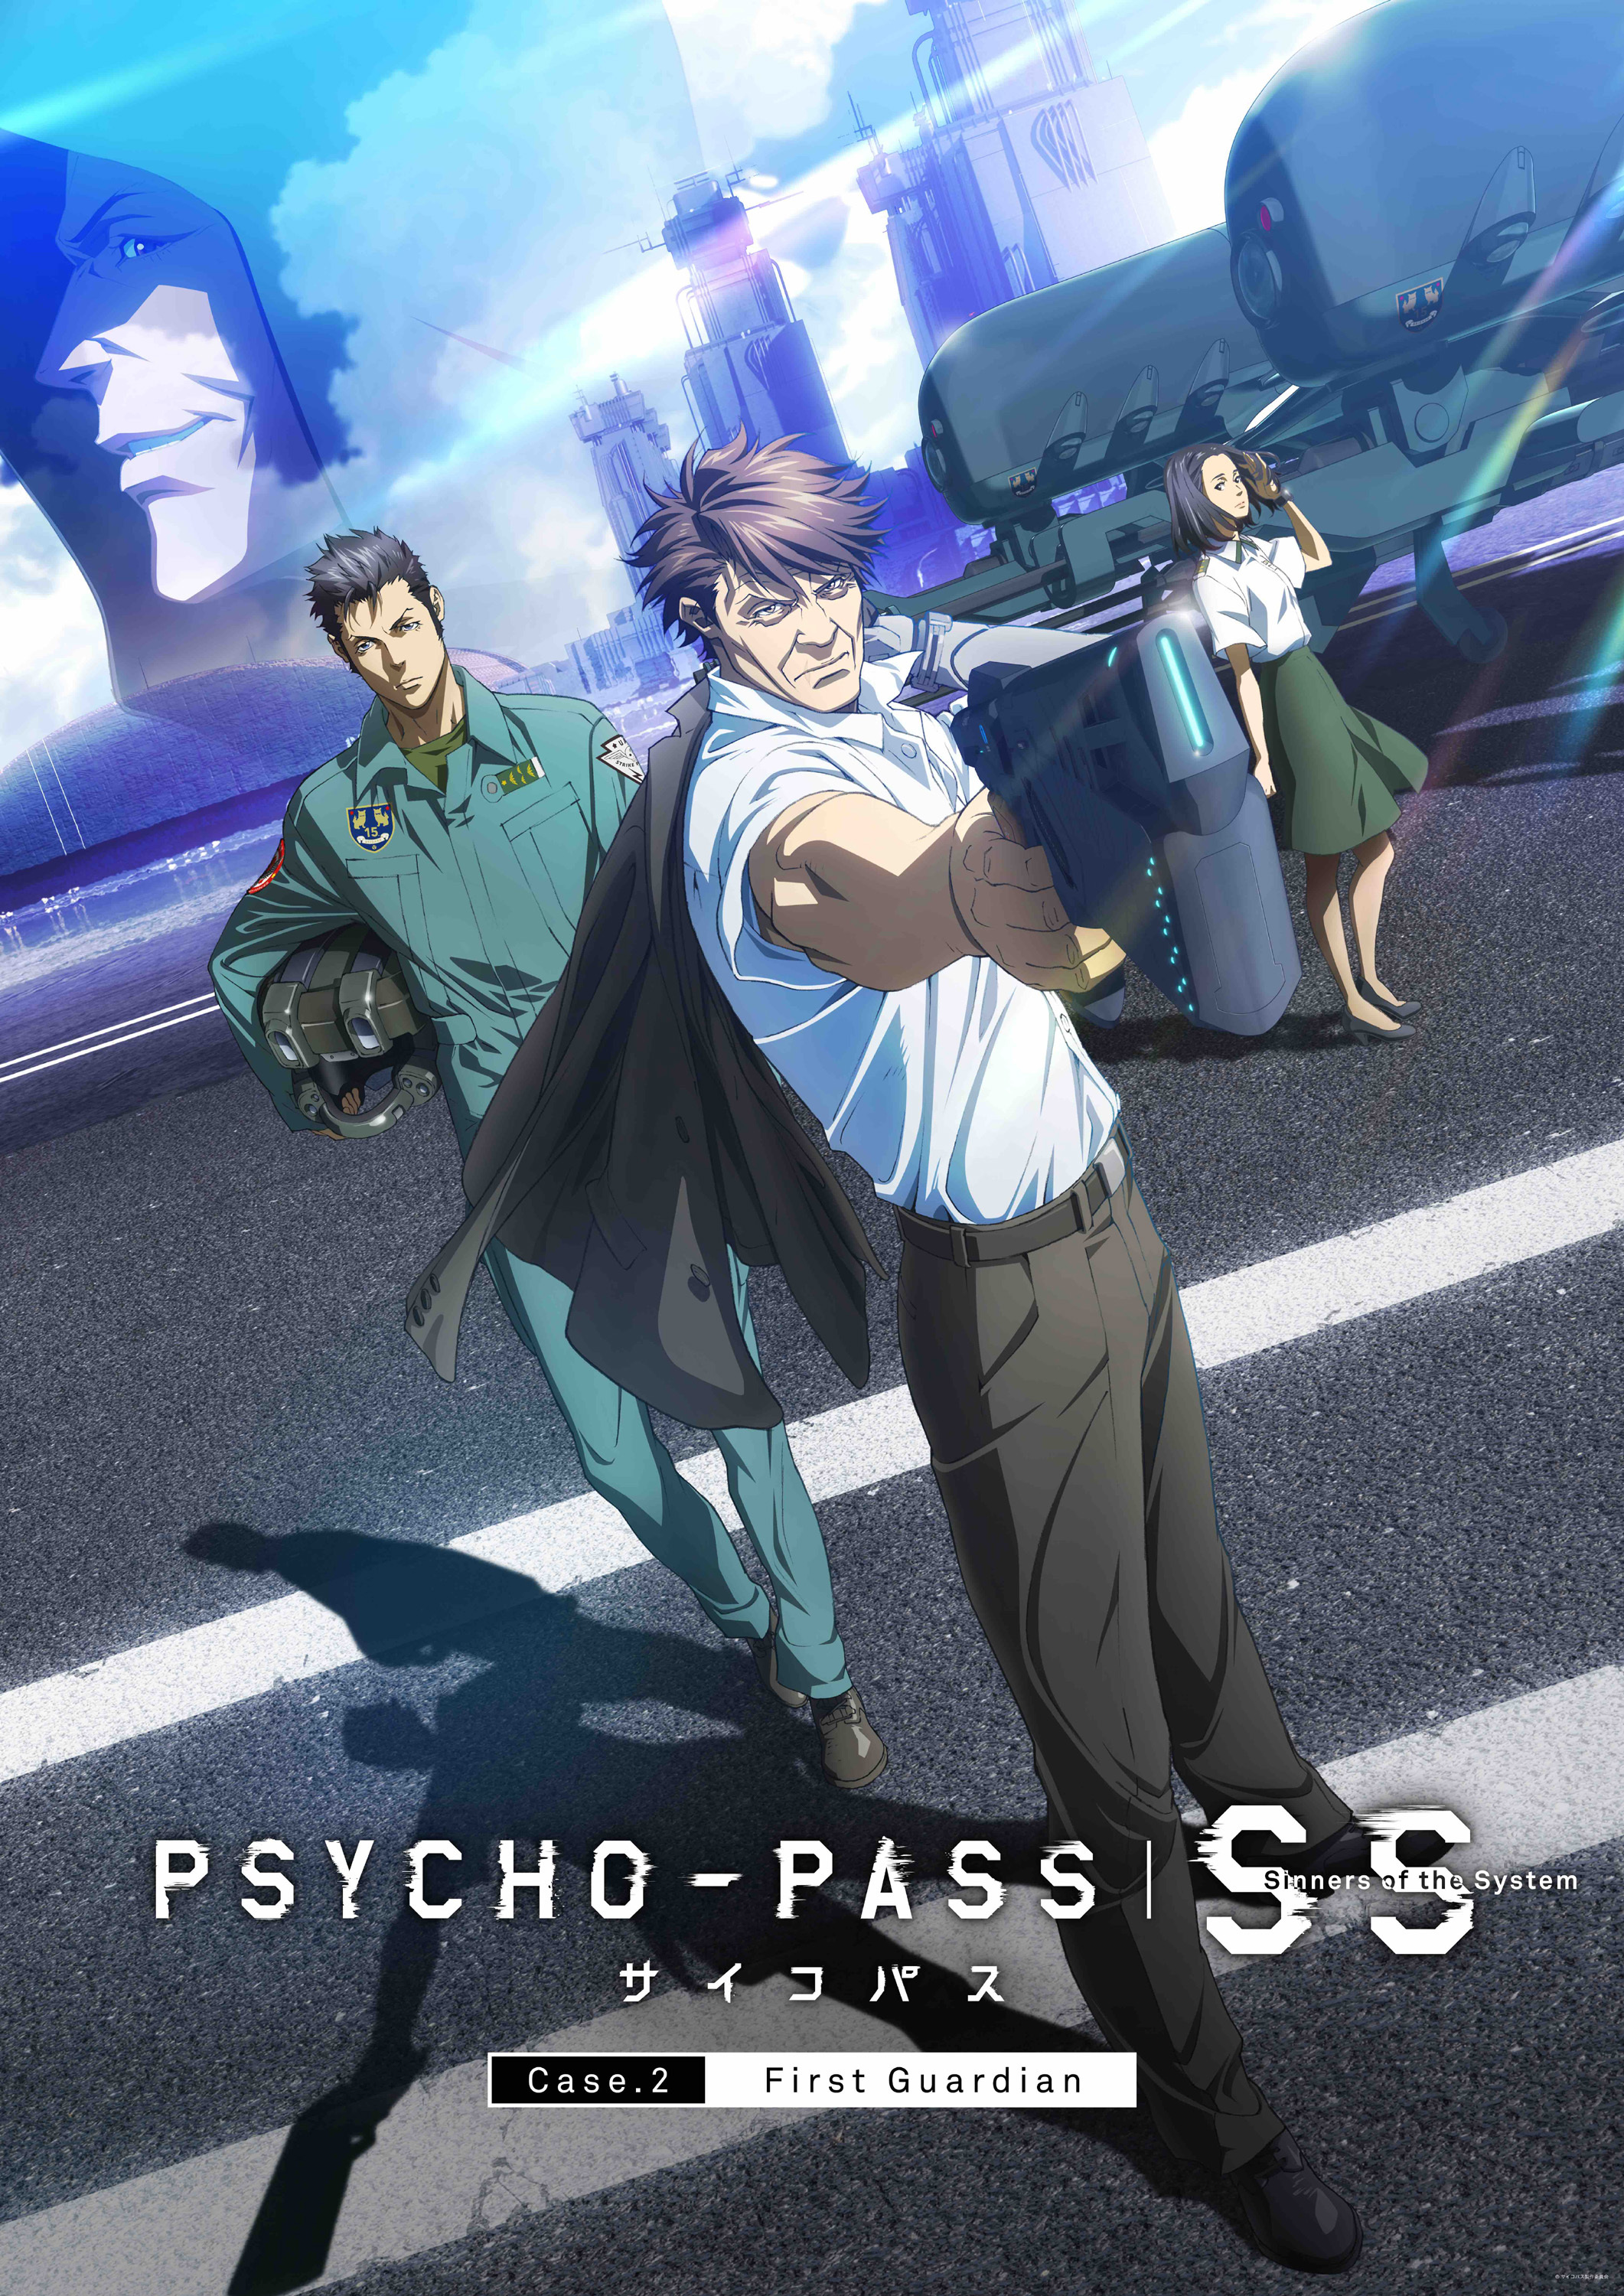 Psycho-Pass grešnici sustava i 3. sezona